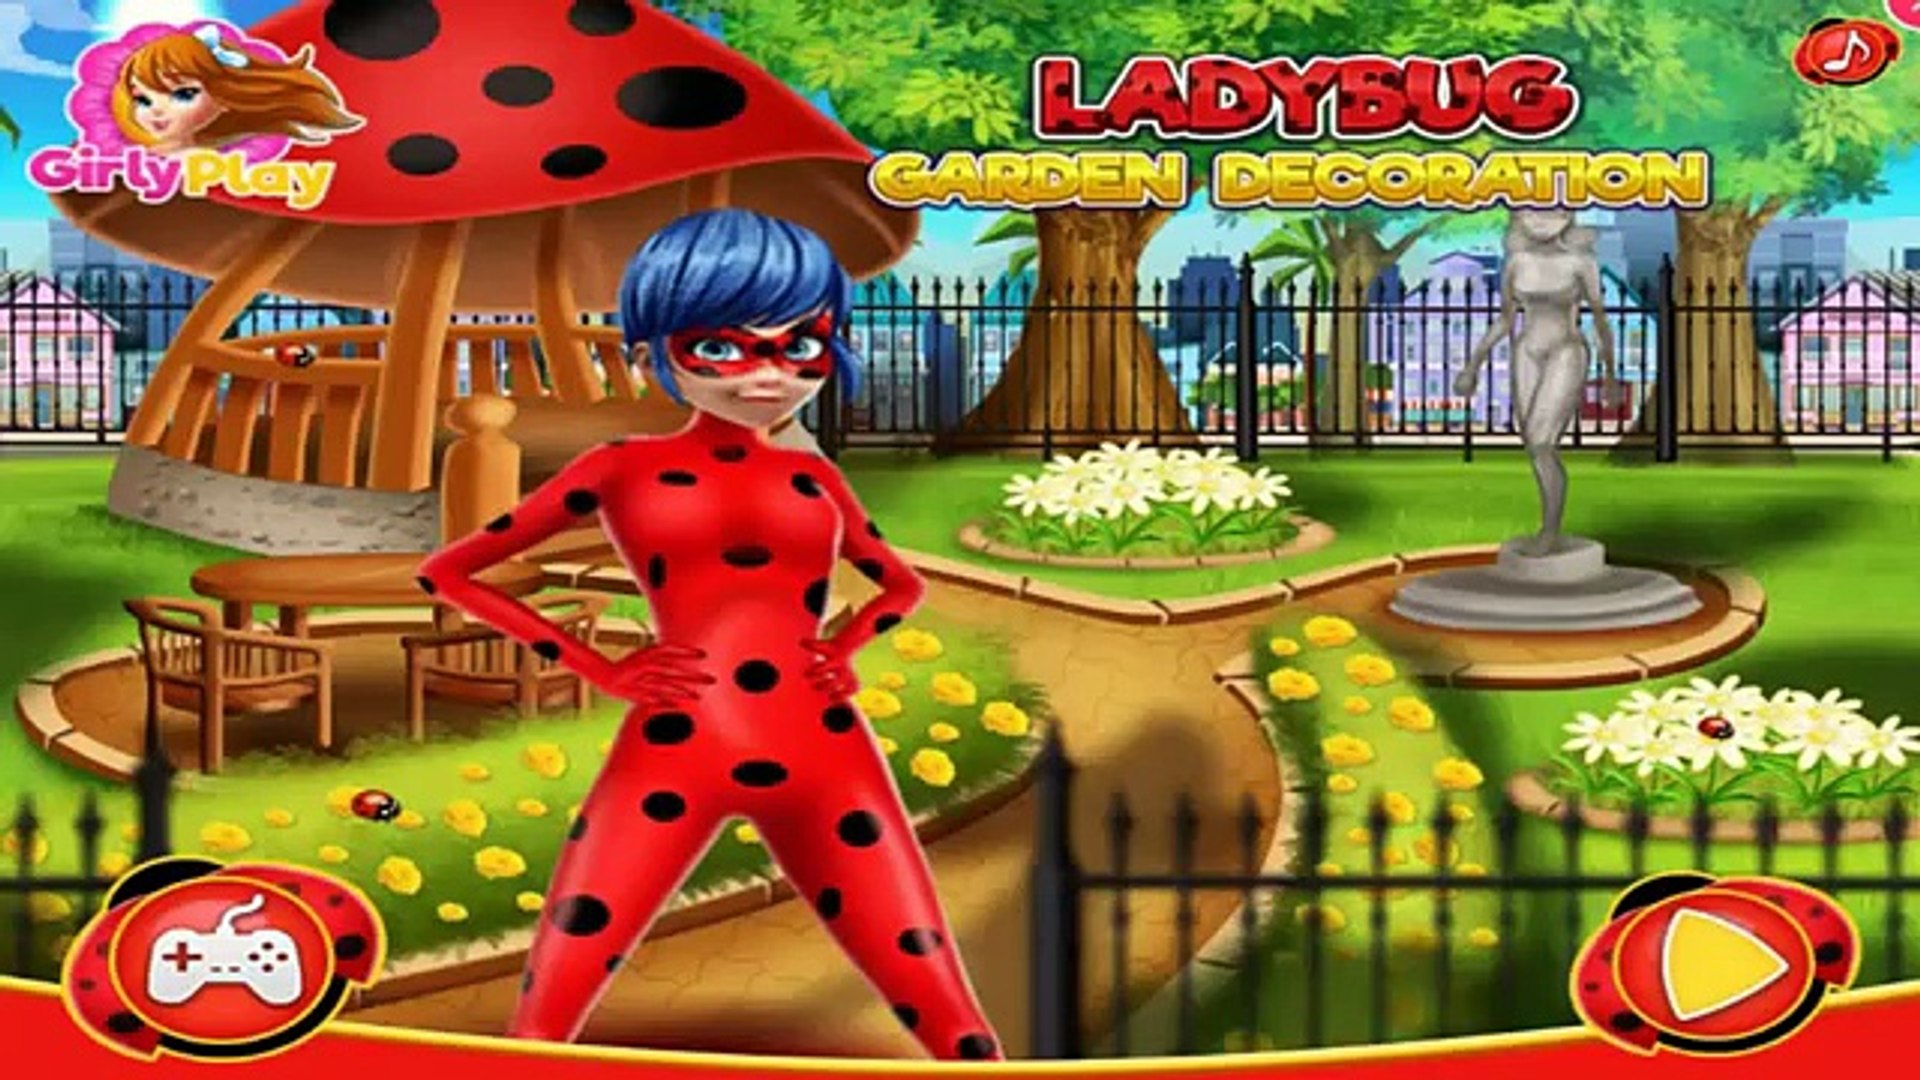 Ladybug Garden Decoration Kids GamePlay - Ladybug Game For Kids